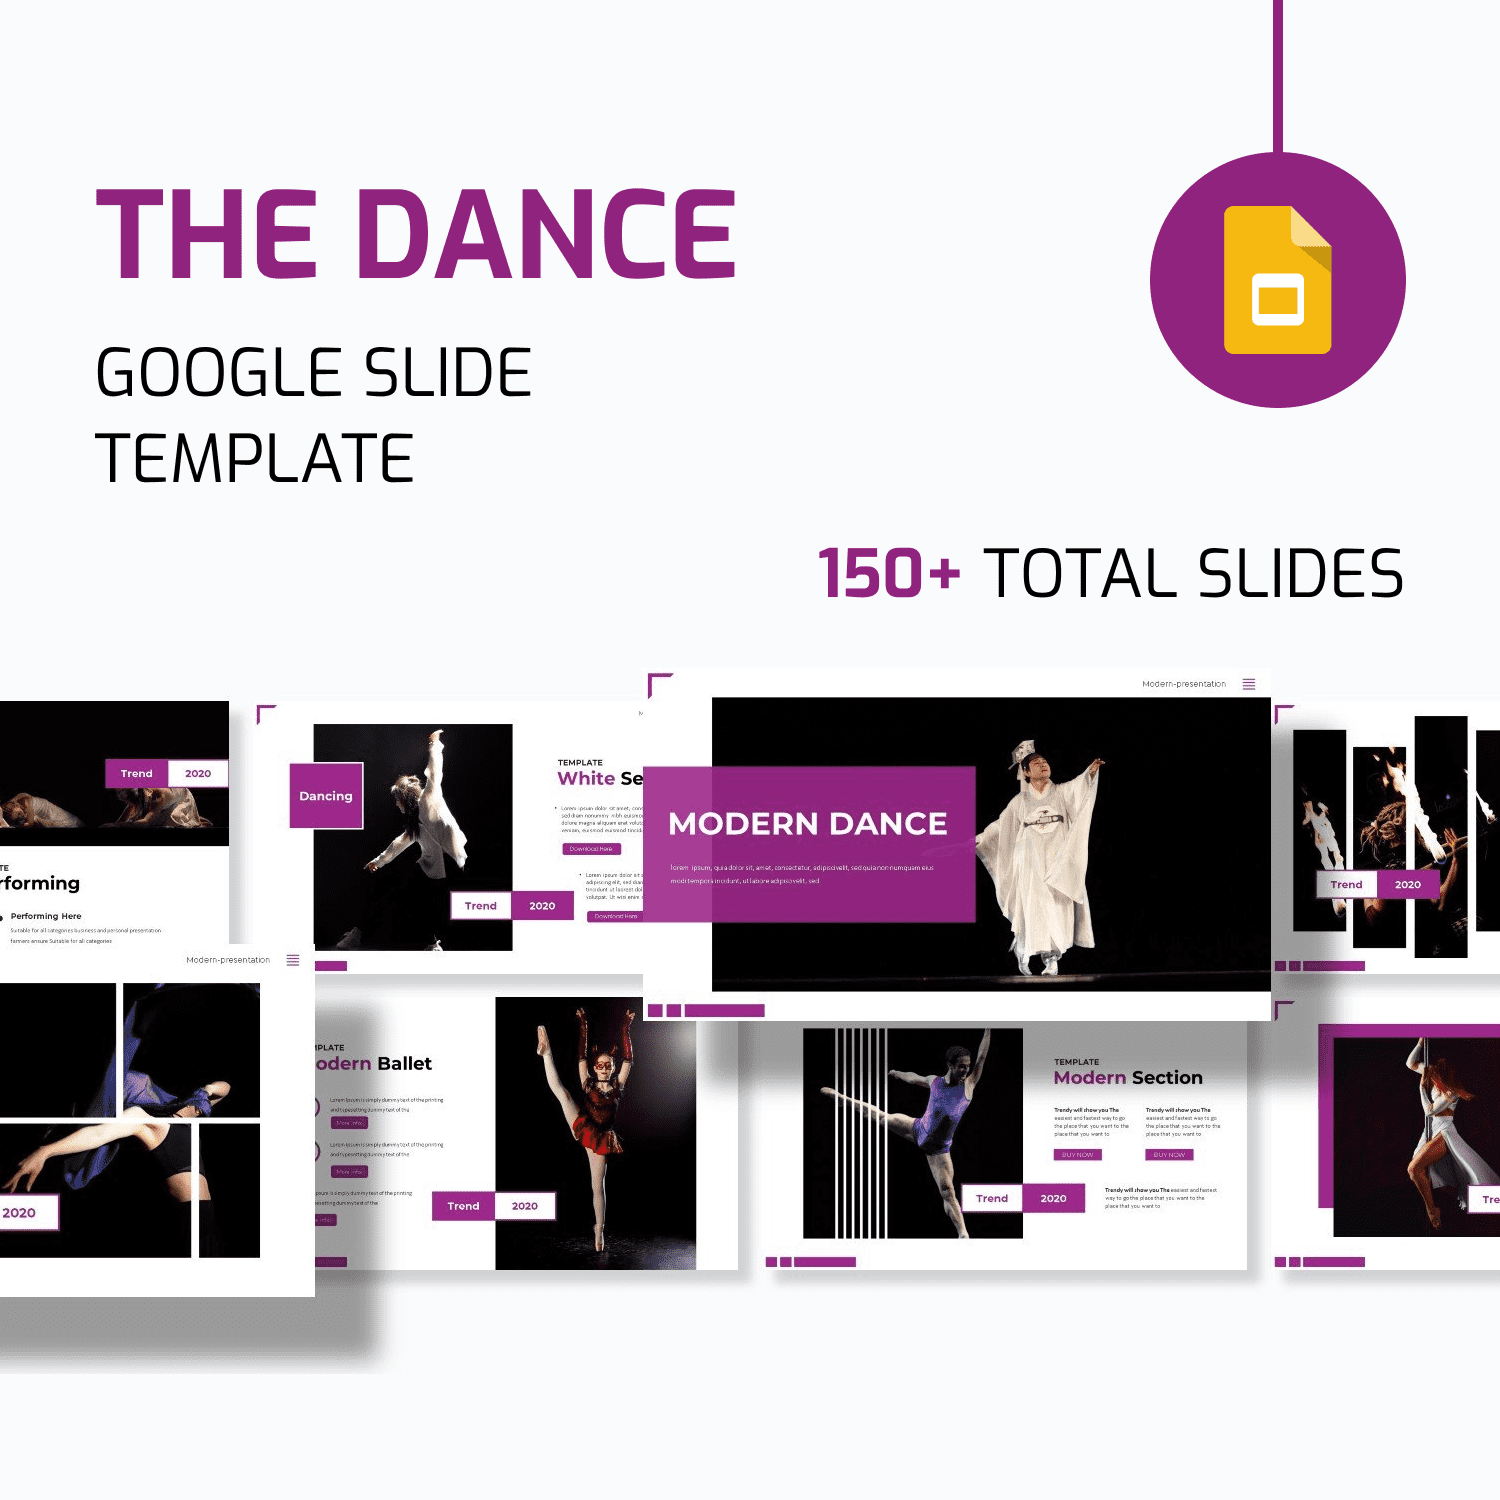 The Dance - Google Slide Template.